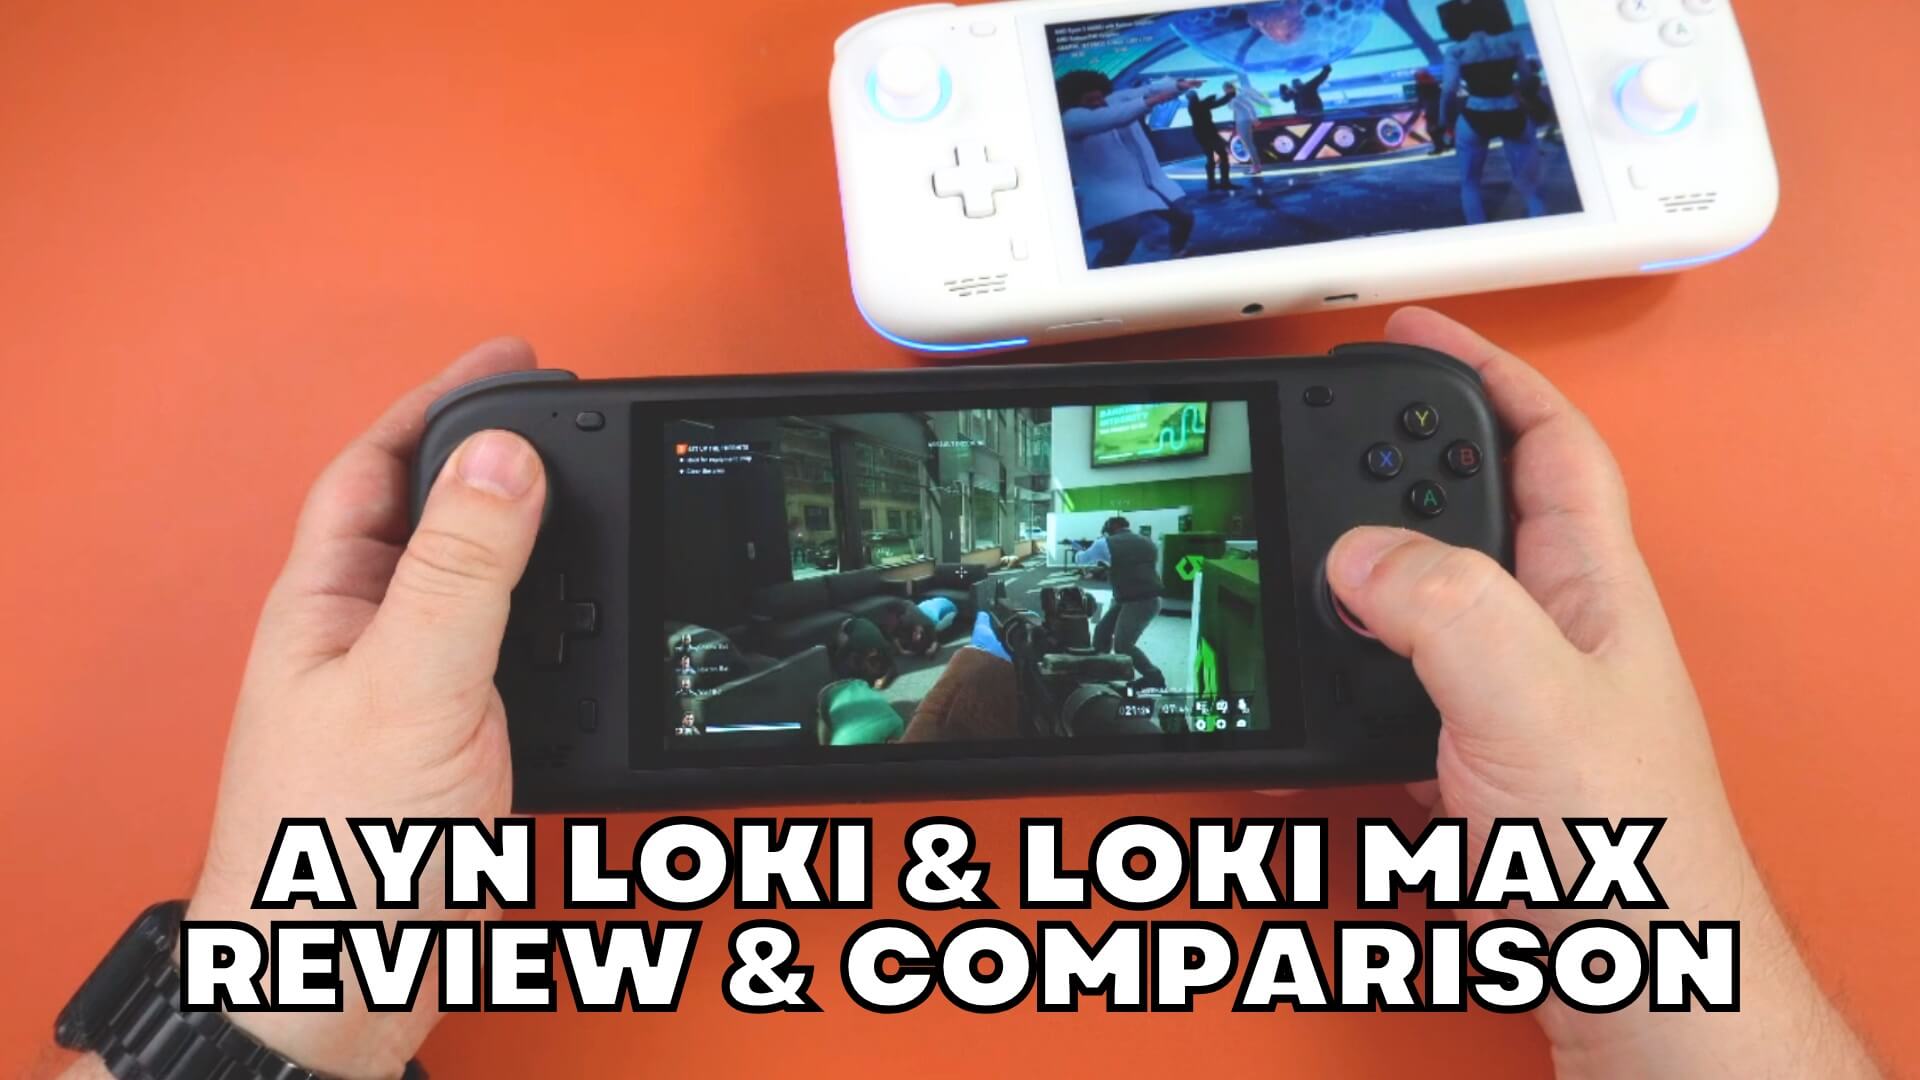 AYN Loki & AYN Loki Max Review with video